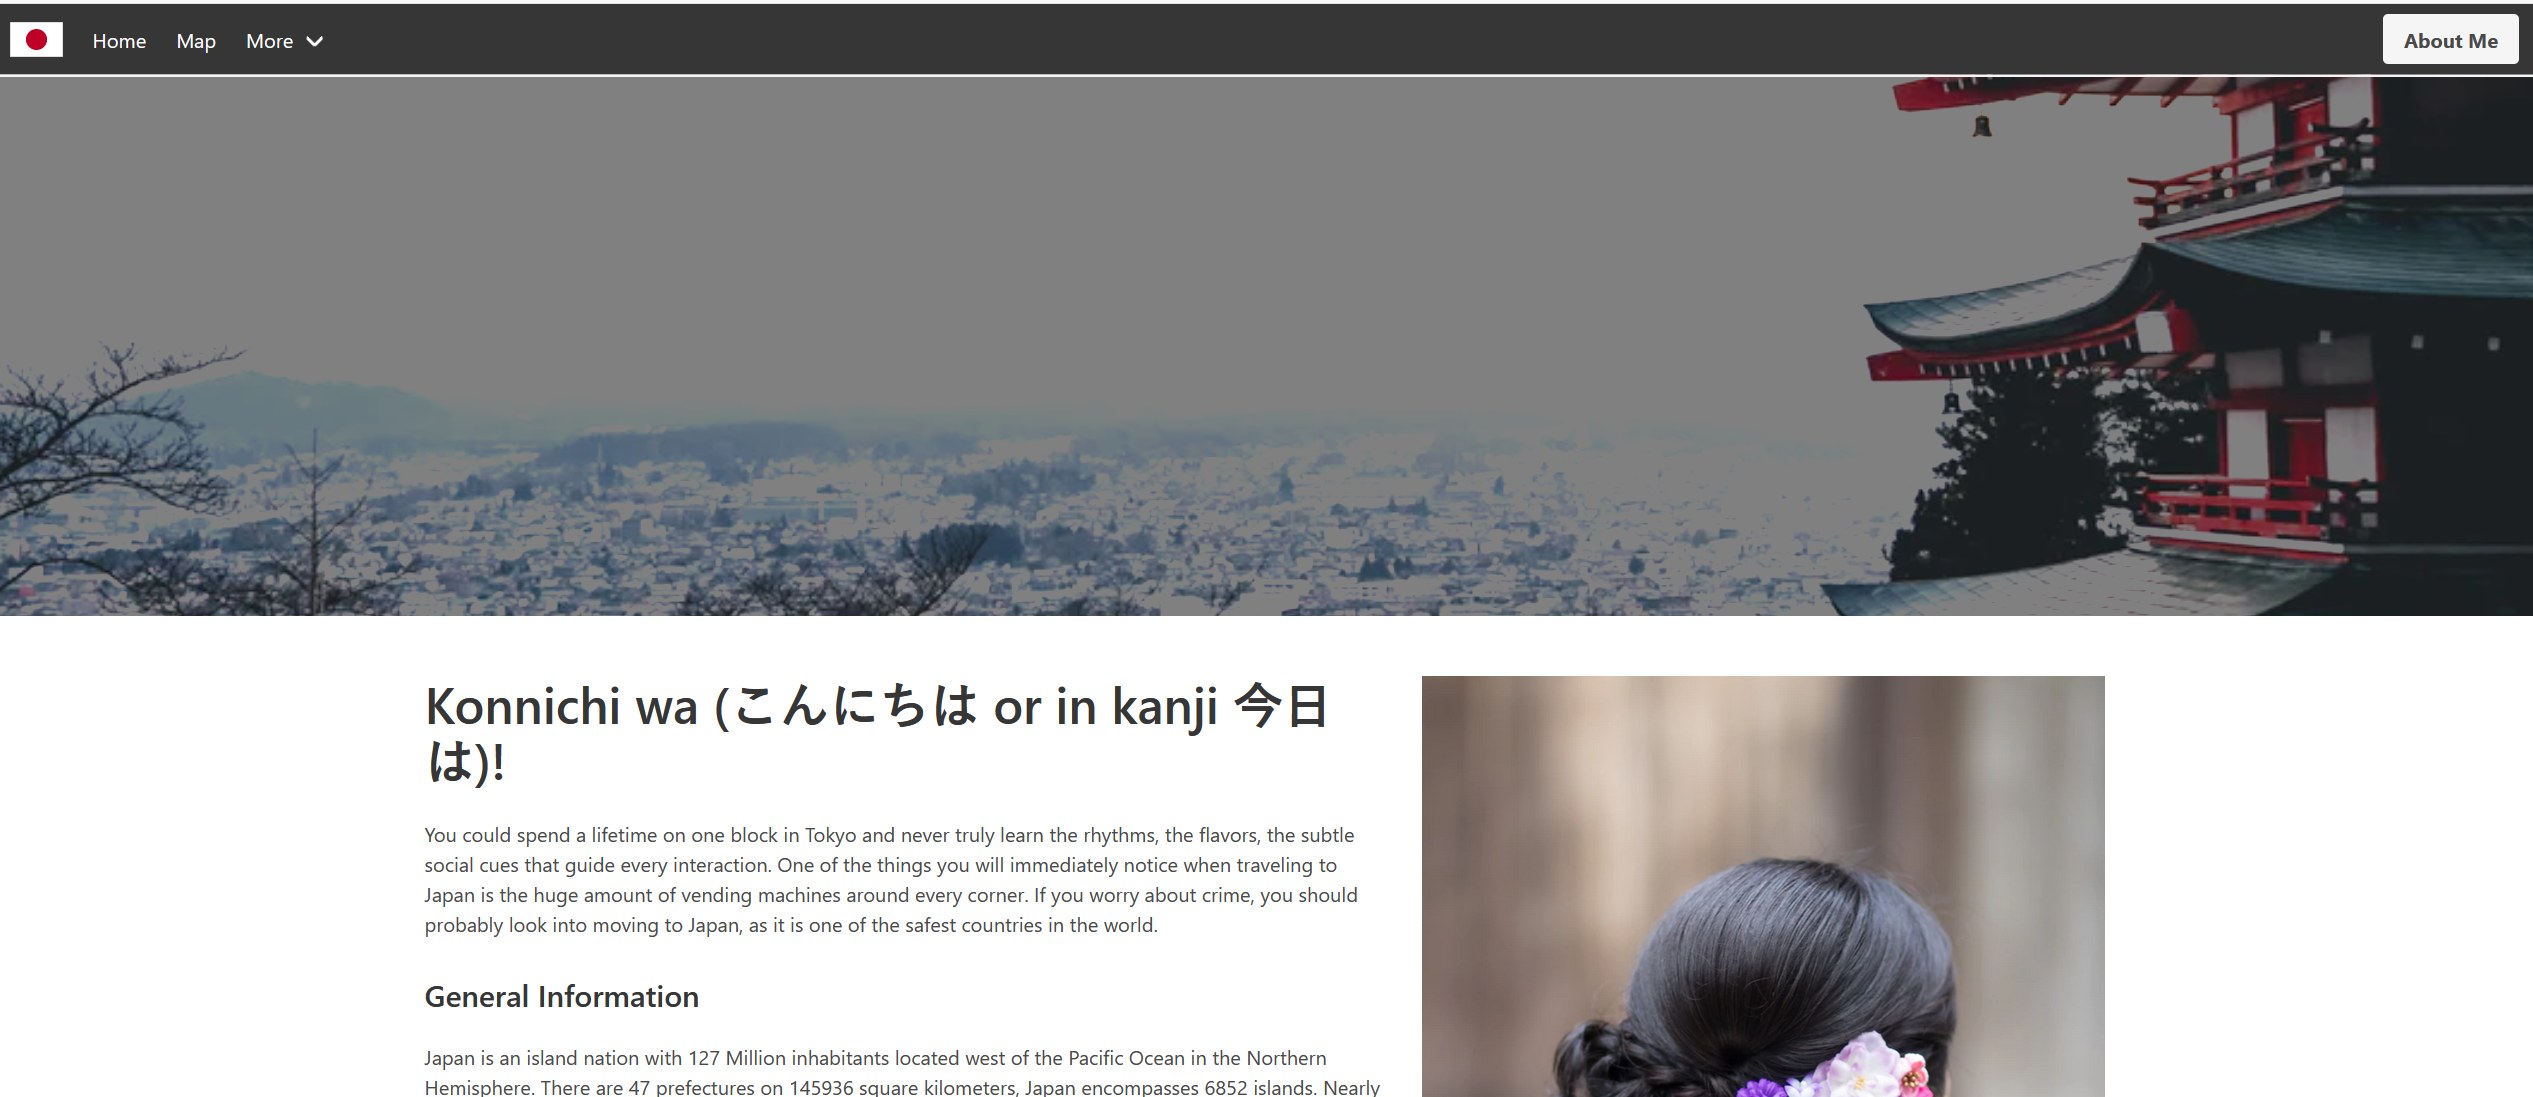 Screenshot of Blog Website about Japan Trip 2019